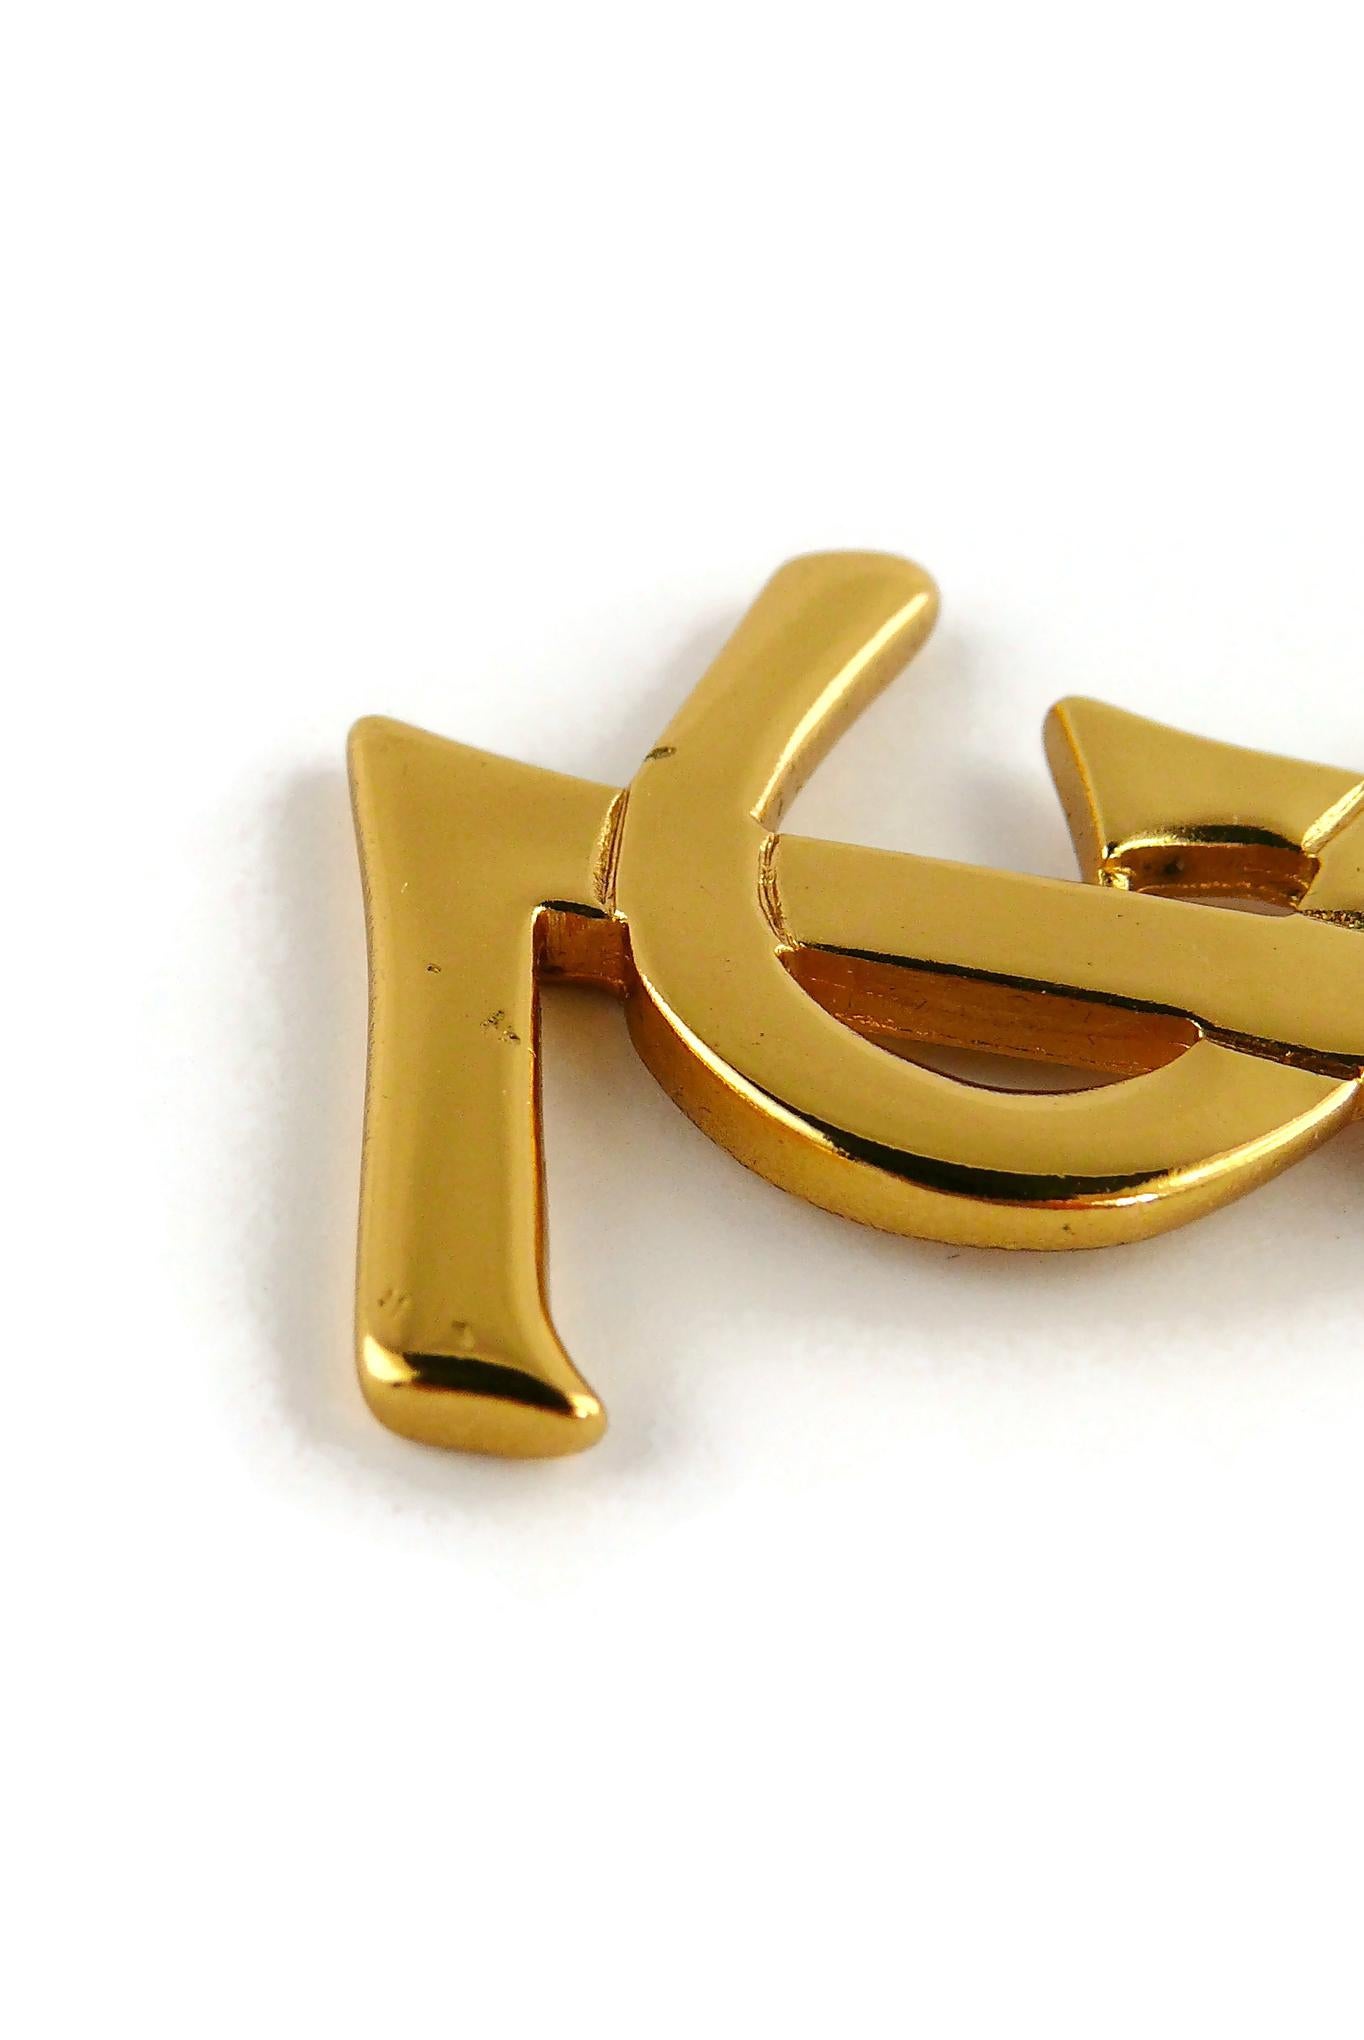 Yves Saint Laurent YSL Vintage Massive Iconic Logo Dangling Earrings 8